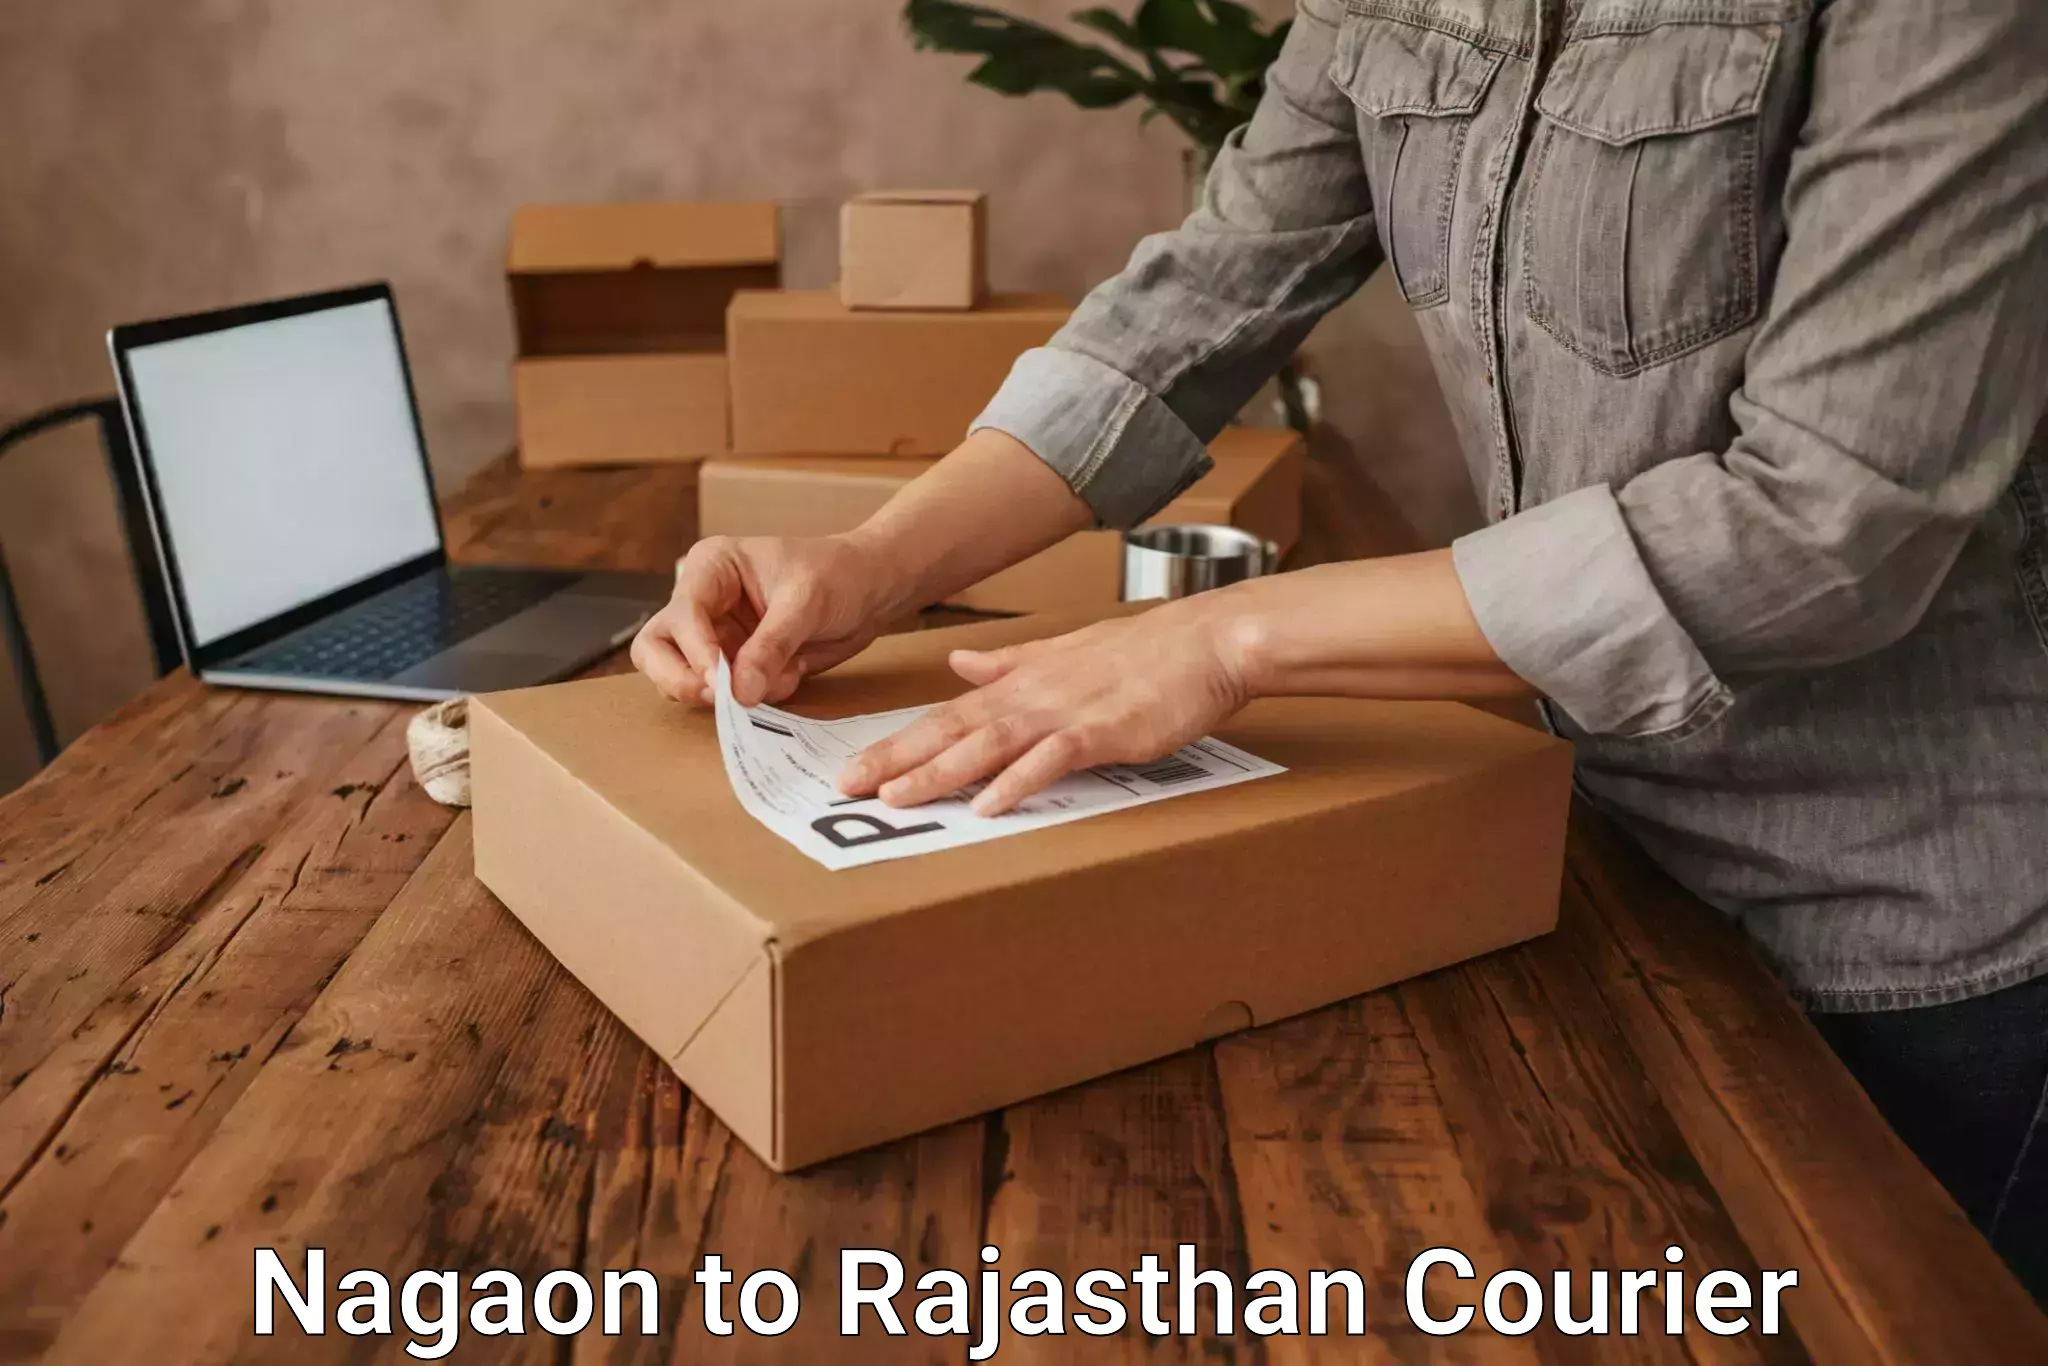 Courier service comparison Nagaon to Chittorgarh